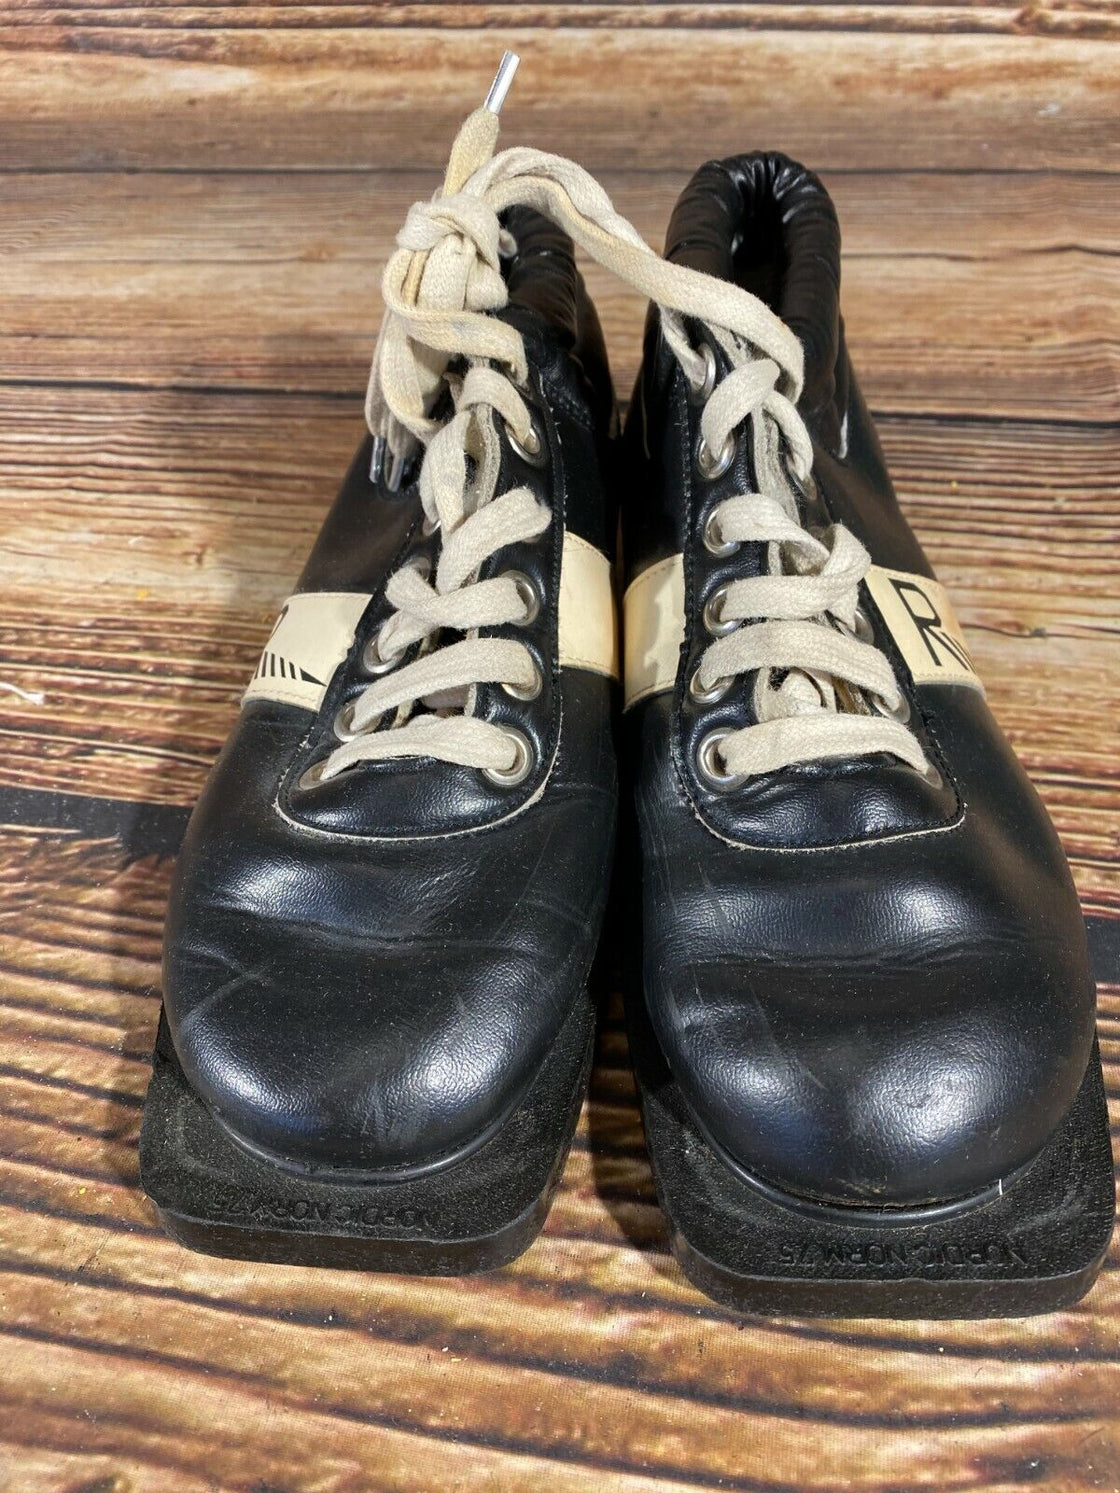 Botas R Vintage Cross Country Ski Boots Size EU40 US7.5 Nordic Norm NN 75mm 3pin